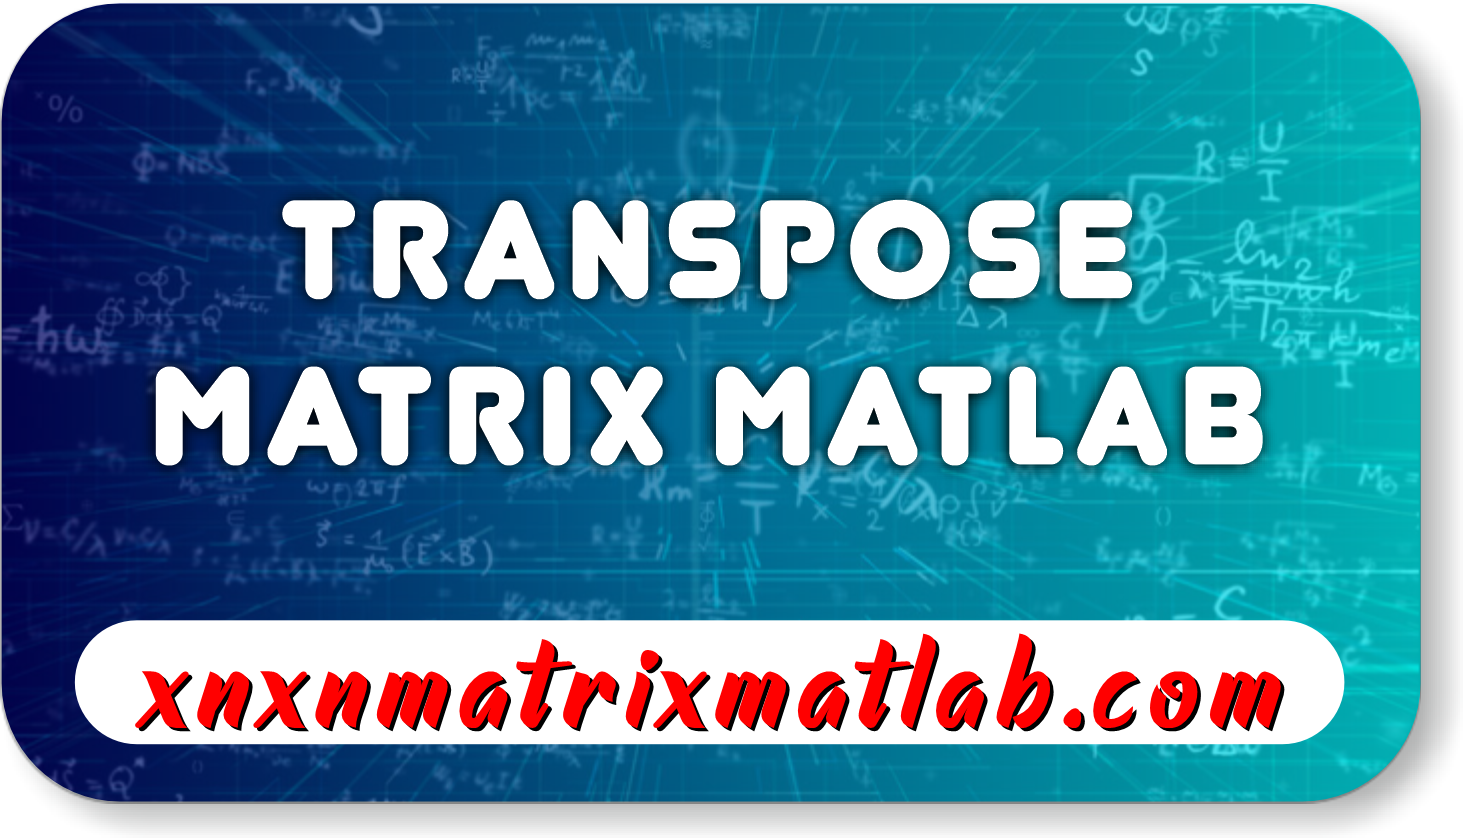 Transpose matrix matlab